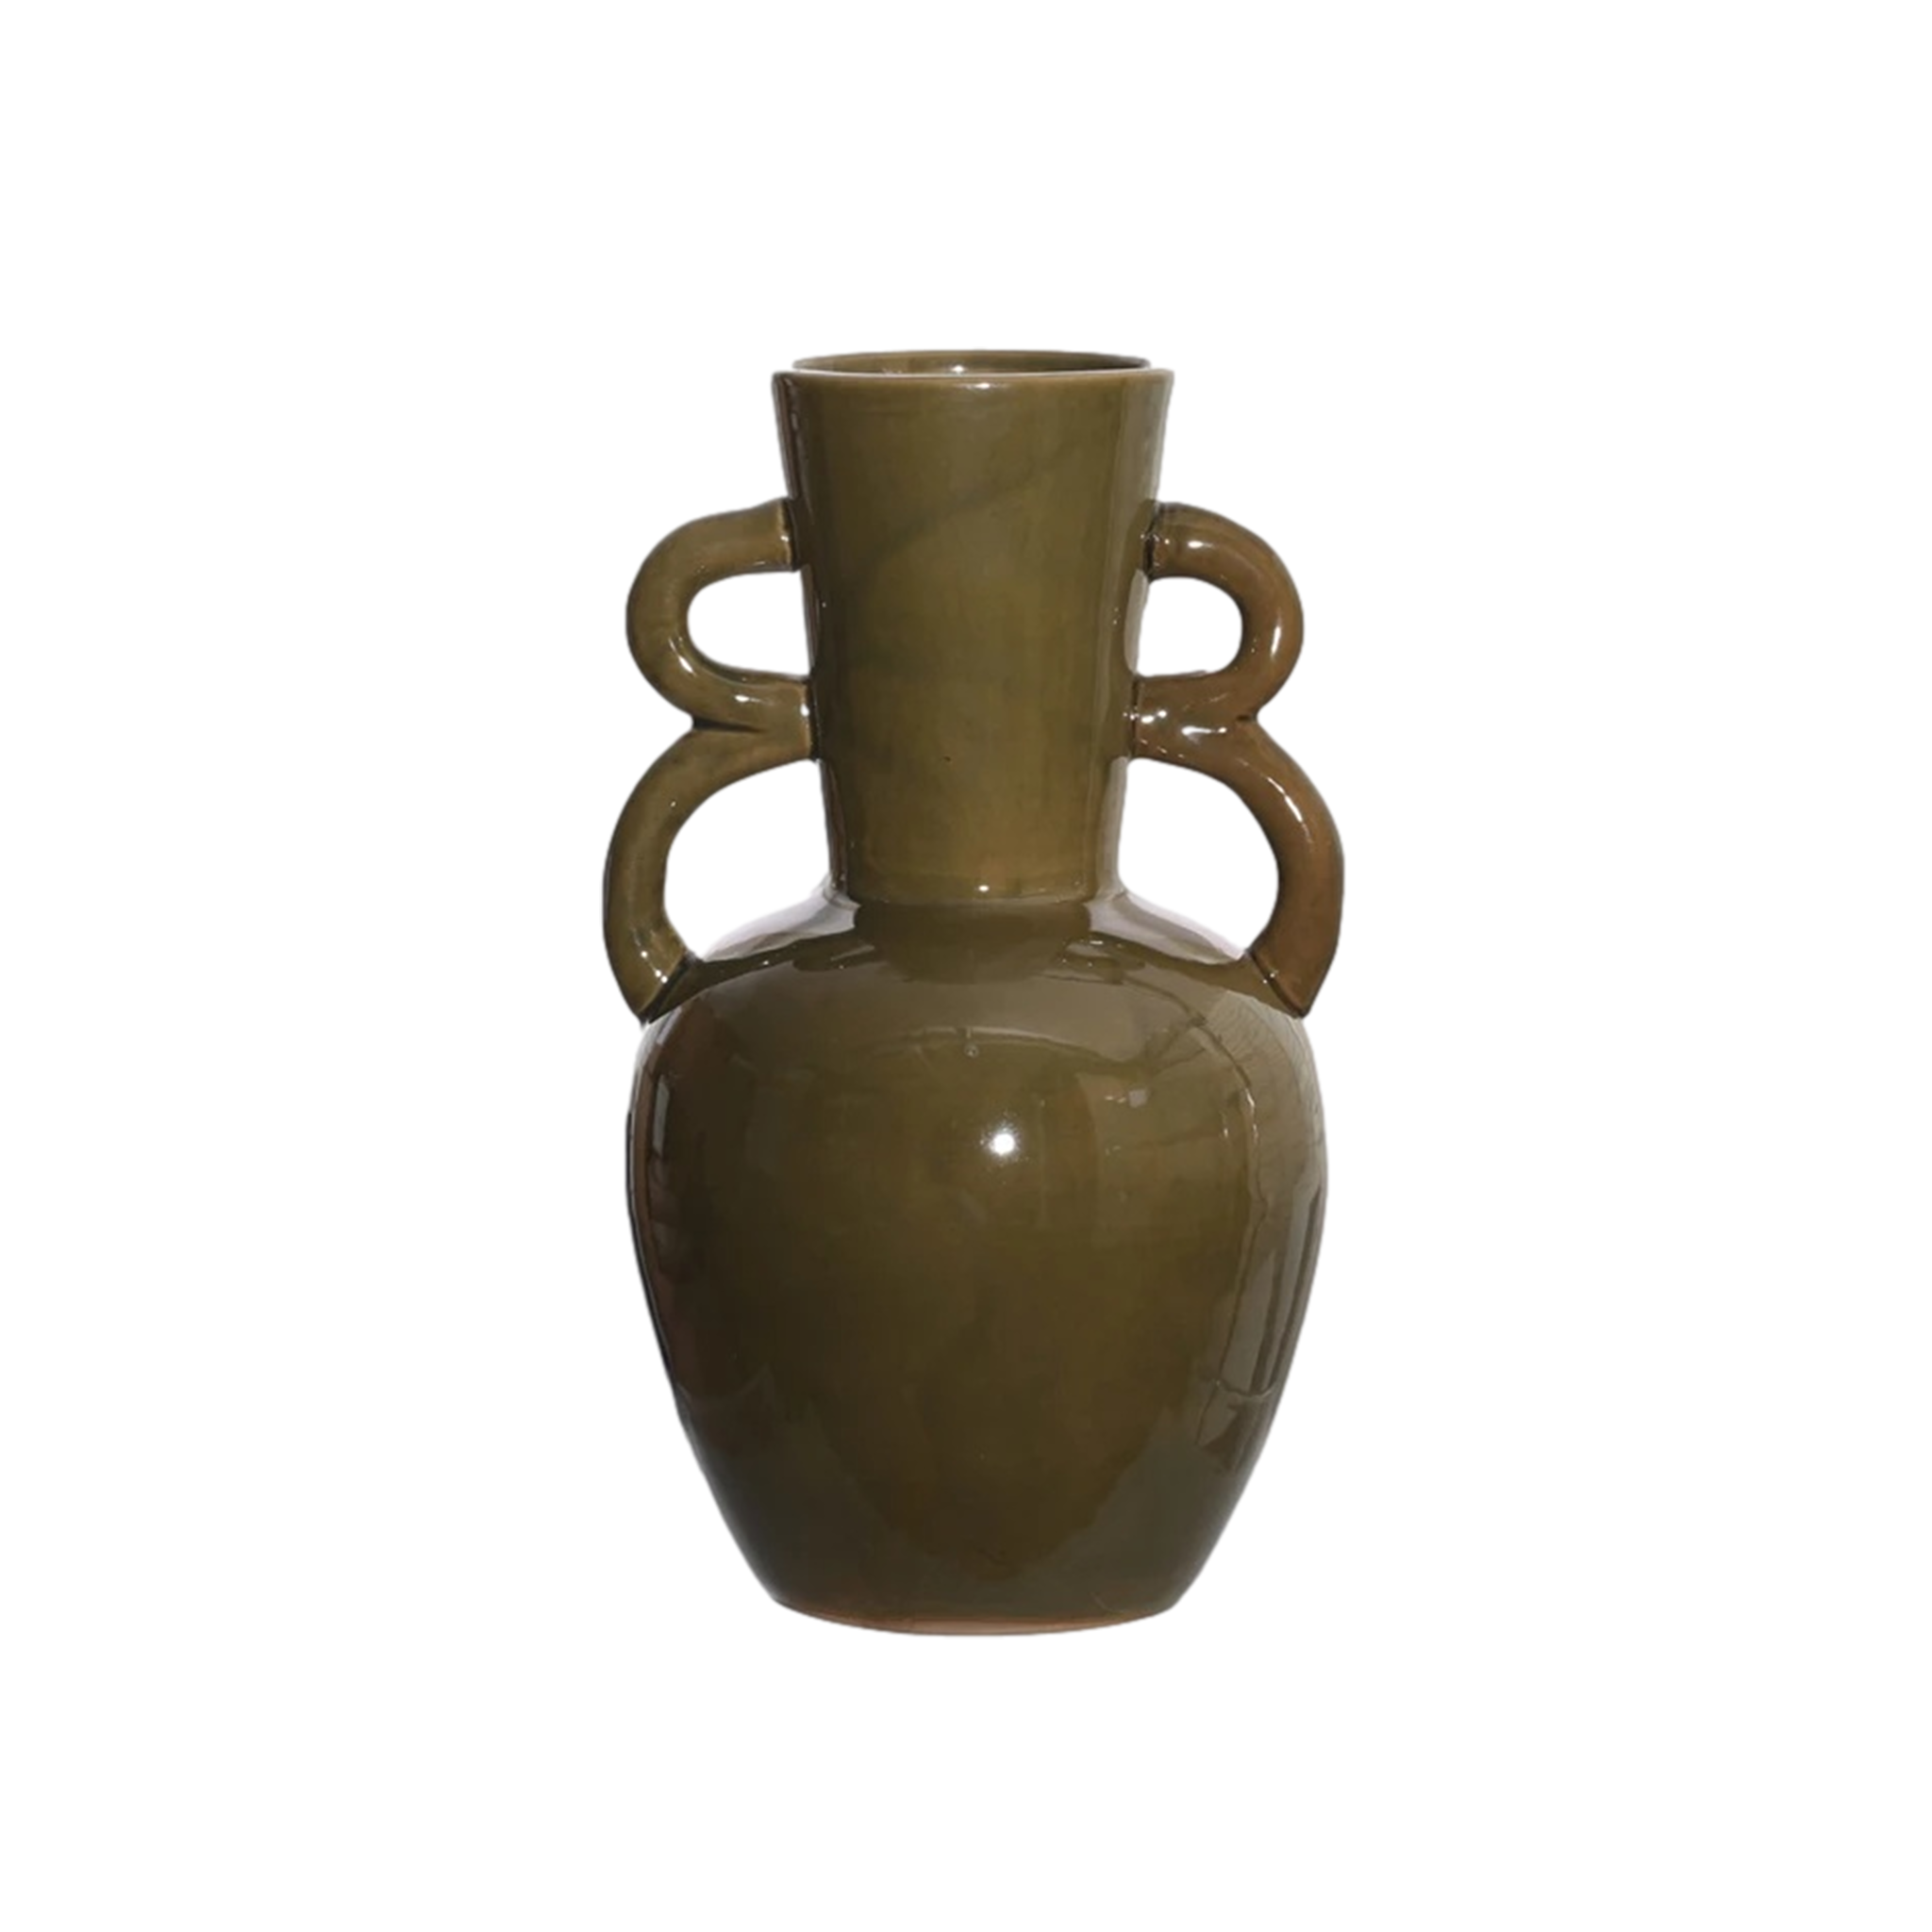 Olive Stoneware Vase with Handles